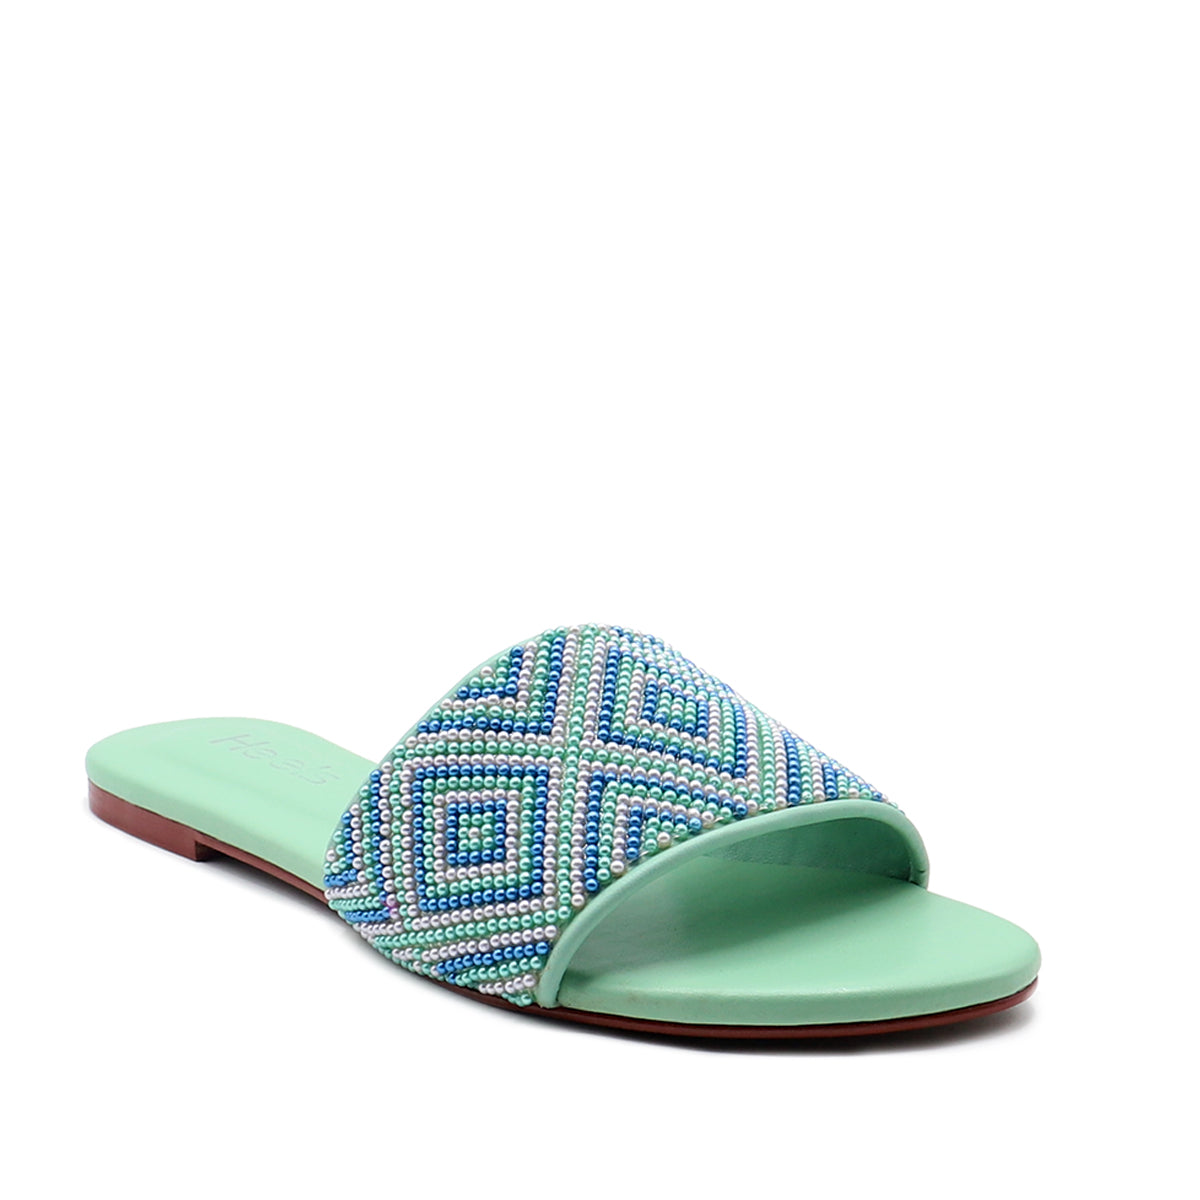 Green Ethnic Slipper 010117 – Heels Shoes